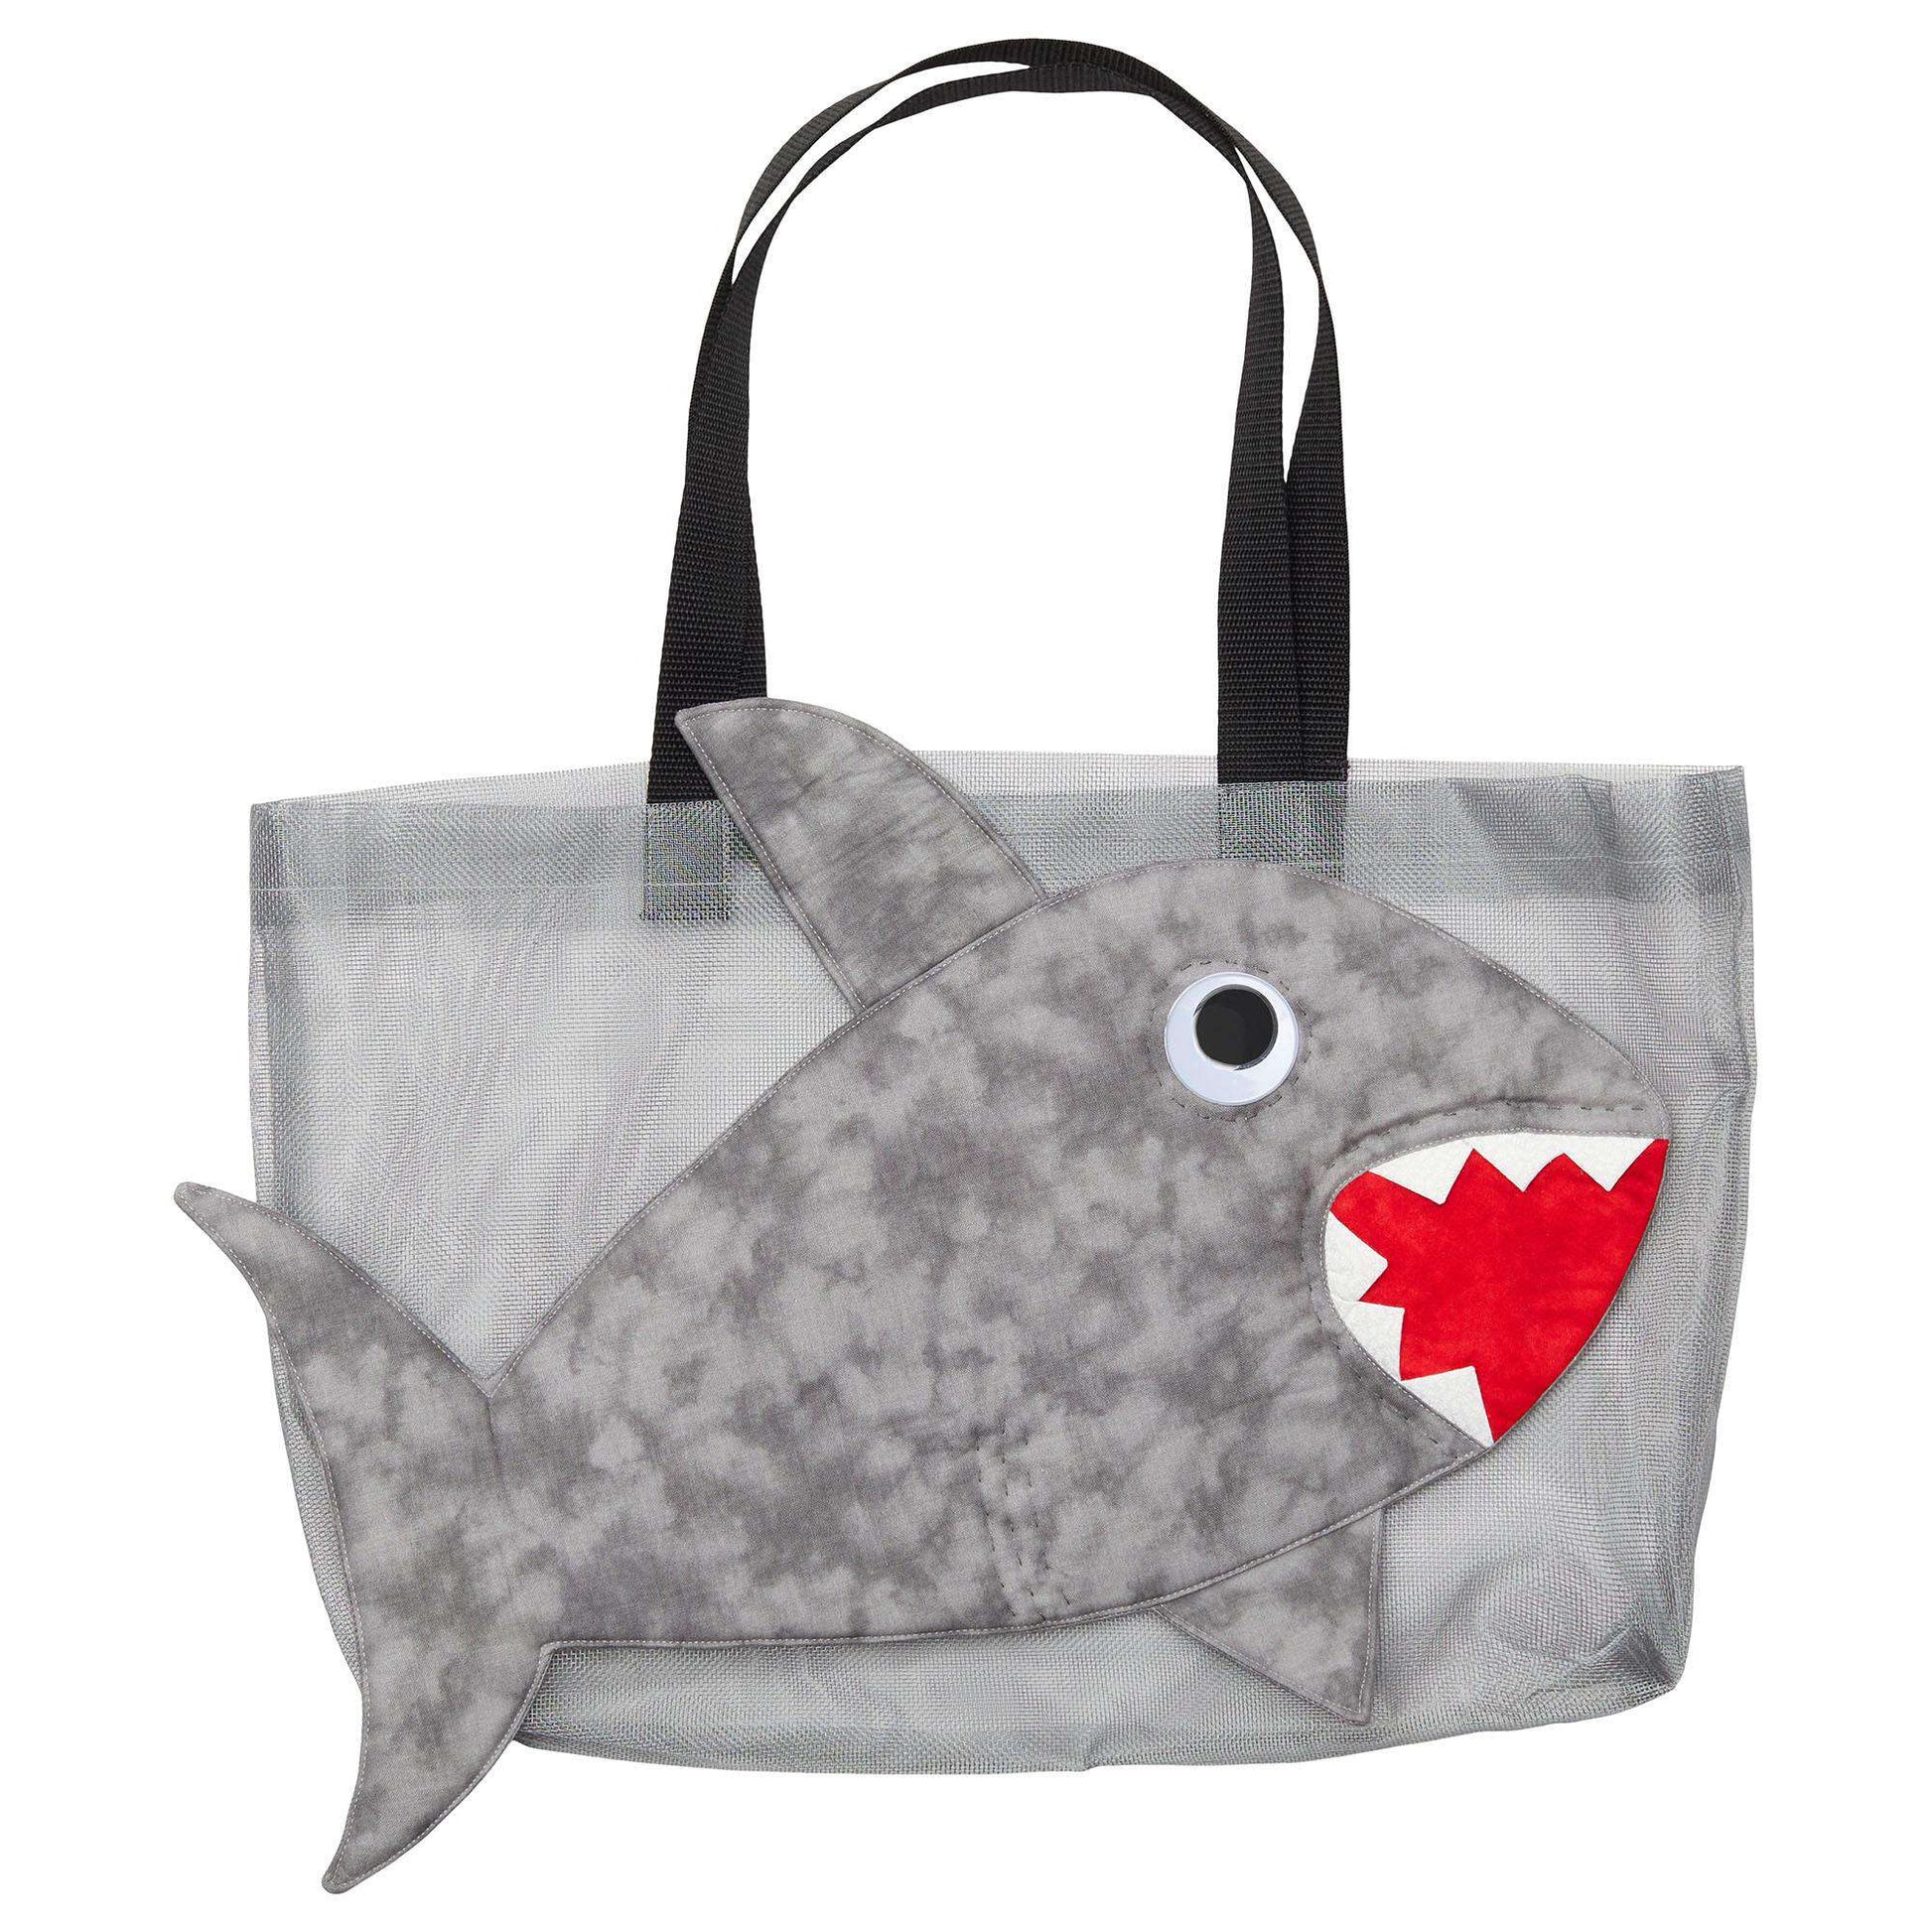 Free Coats & Clark Shark Tote Bag Sewing Pattern